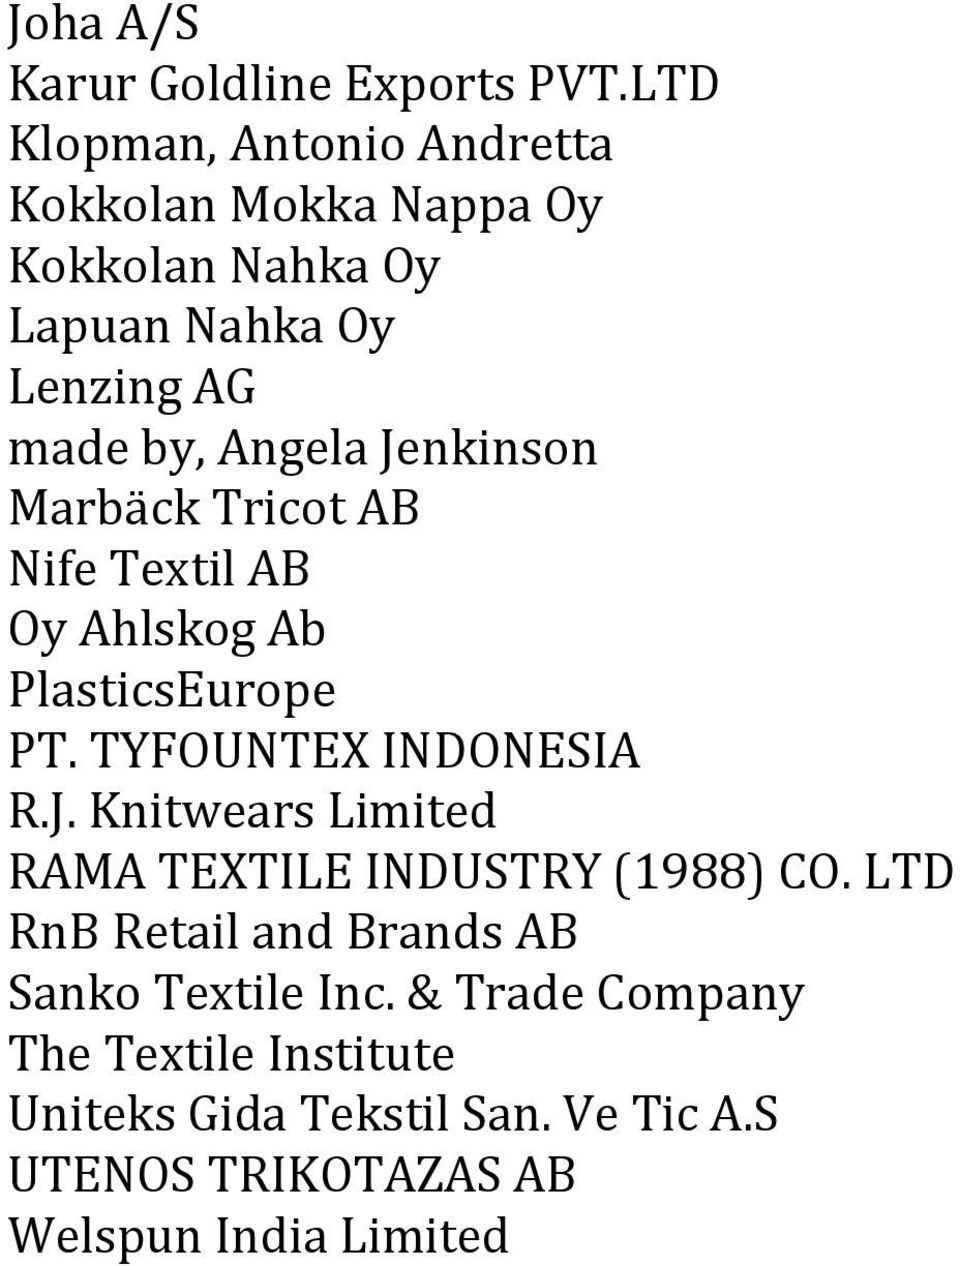 Jenkinson Marbäck Tricot AB Nife Textil AB Oy Ahlskog Ab PlasticsEurope PT. TYFOUNTEX INDONESIA R.J. Knitwears Limited RAMA TEXTILE INDUSTRY (1988) CO.